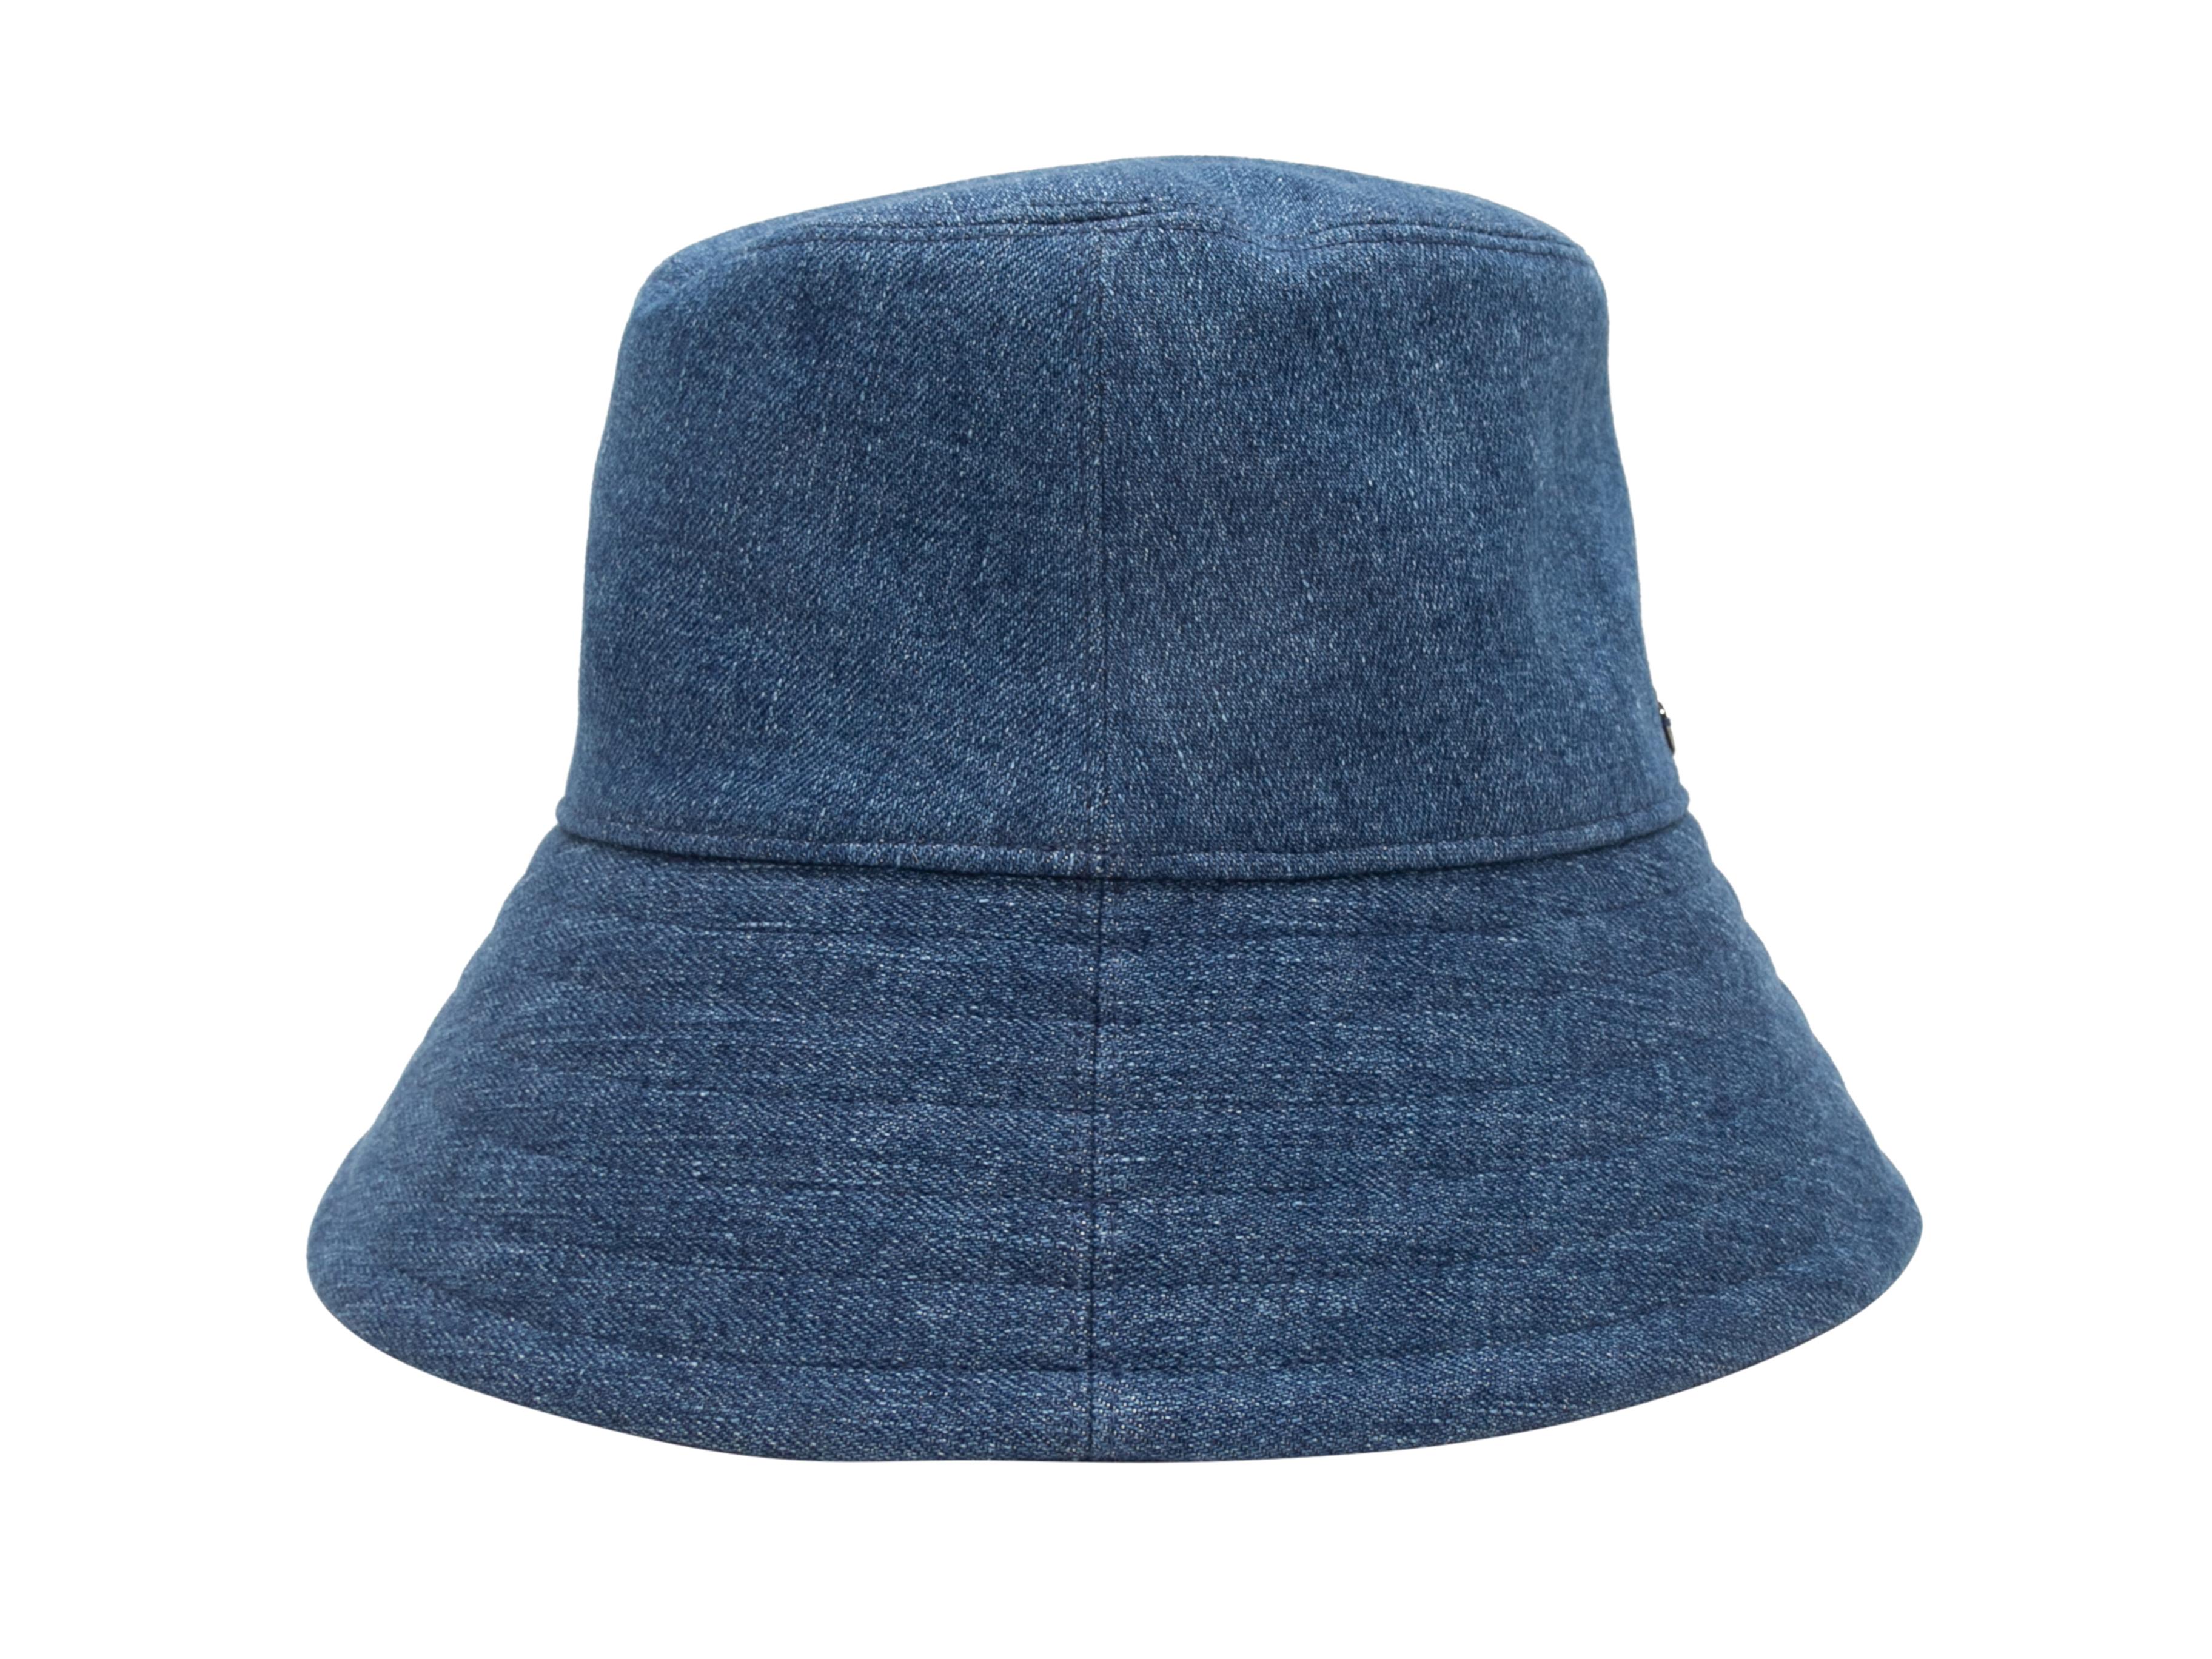 Medium wash denim bucket hat by Loro Piana. 3.25